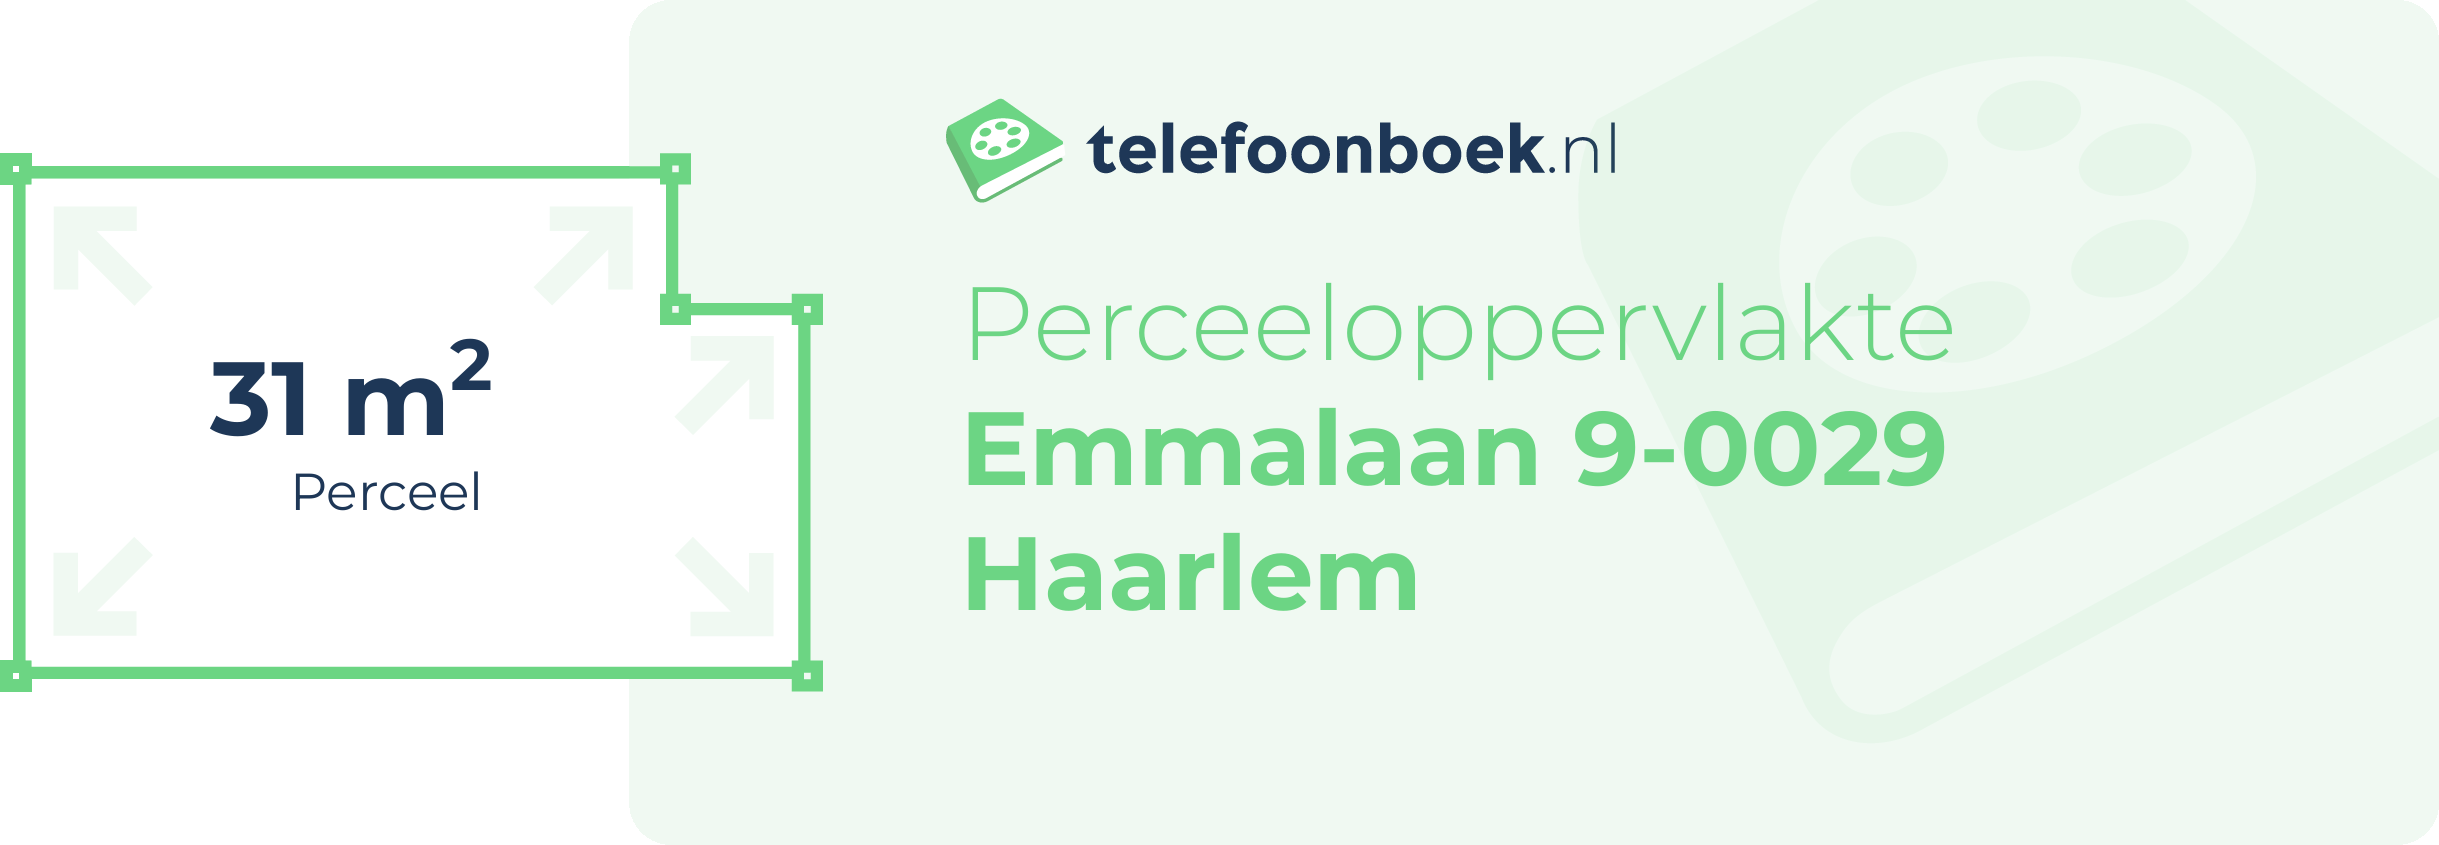 Perceeloppervlakte Emmalaan 9-0029 Haarlem